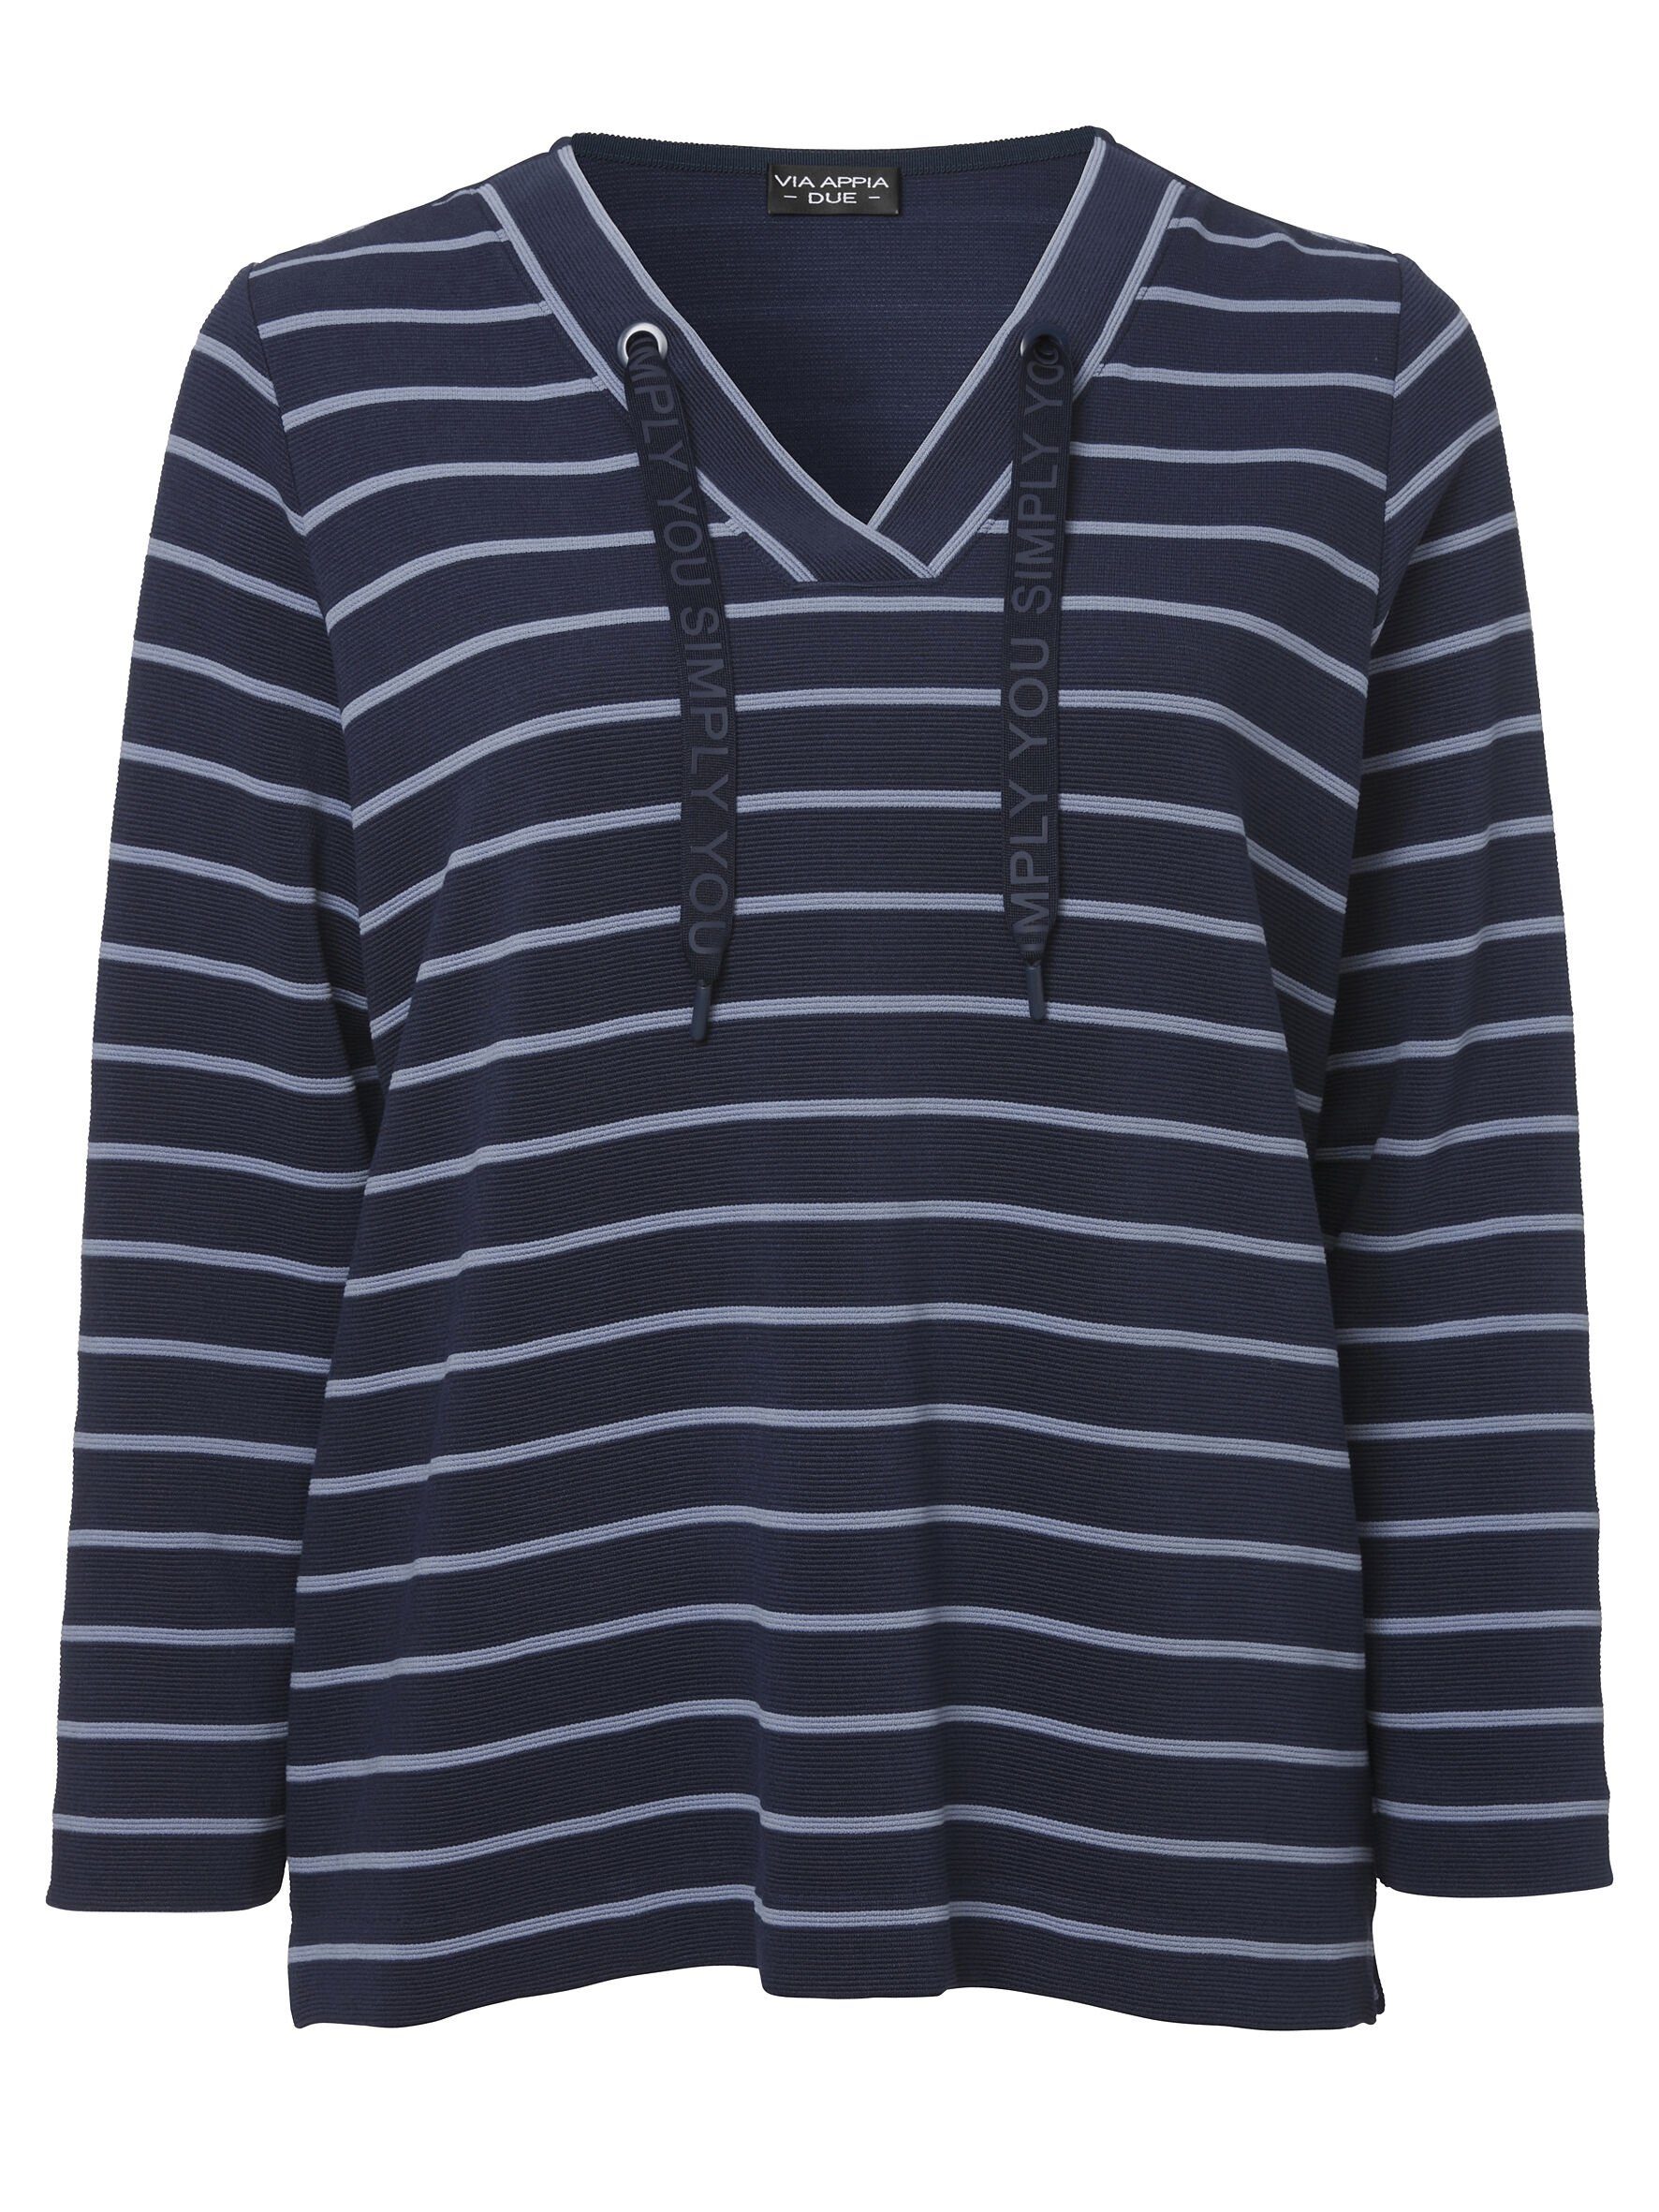 VIA APPIA DUE Sweatshirt Sportives Sweatshirt mit gestreiftem Allover-Muster indigo / rauchblau